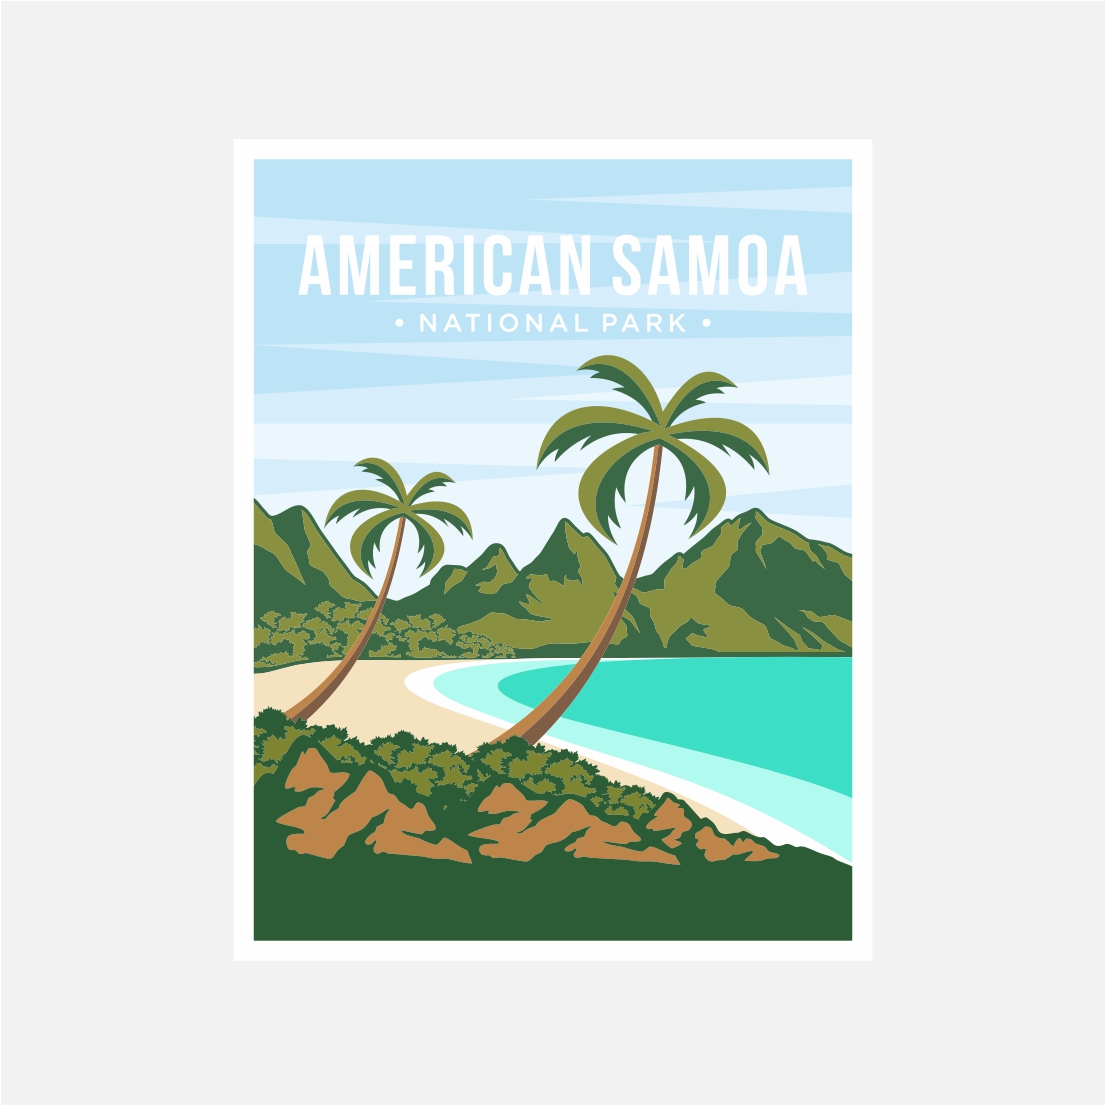 American Samoa National Park poster vector illustration design - $8 preview image.